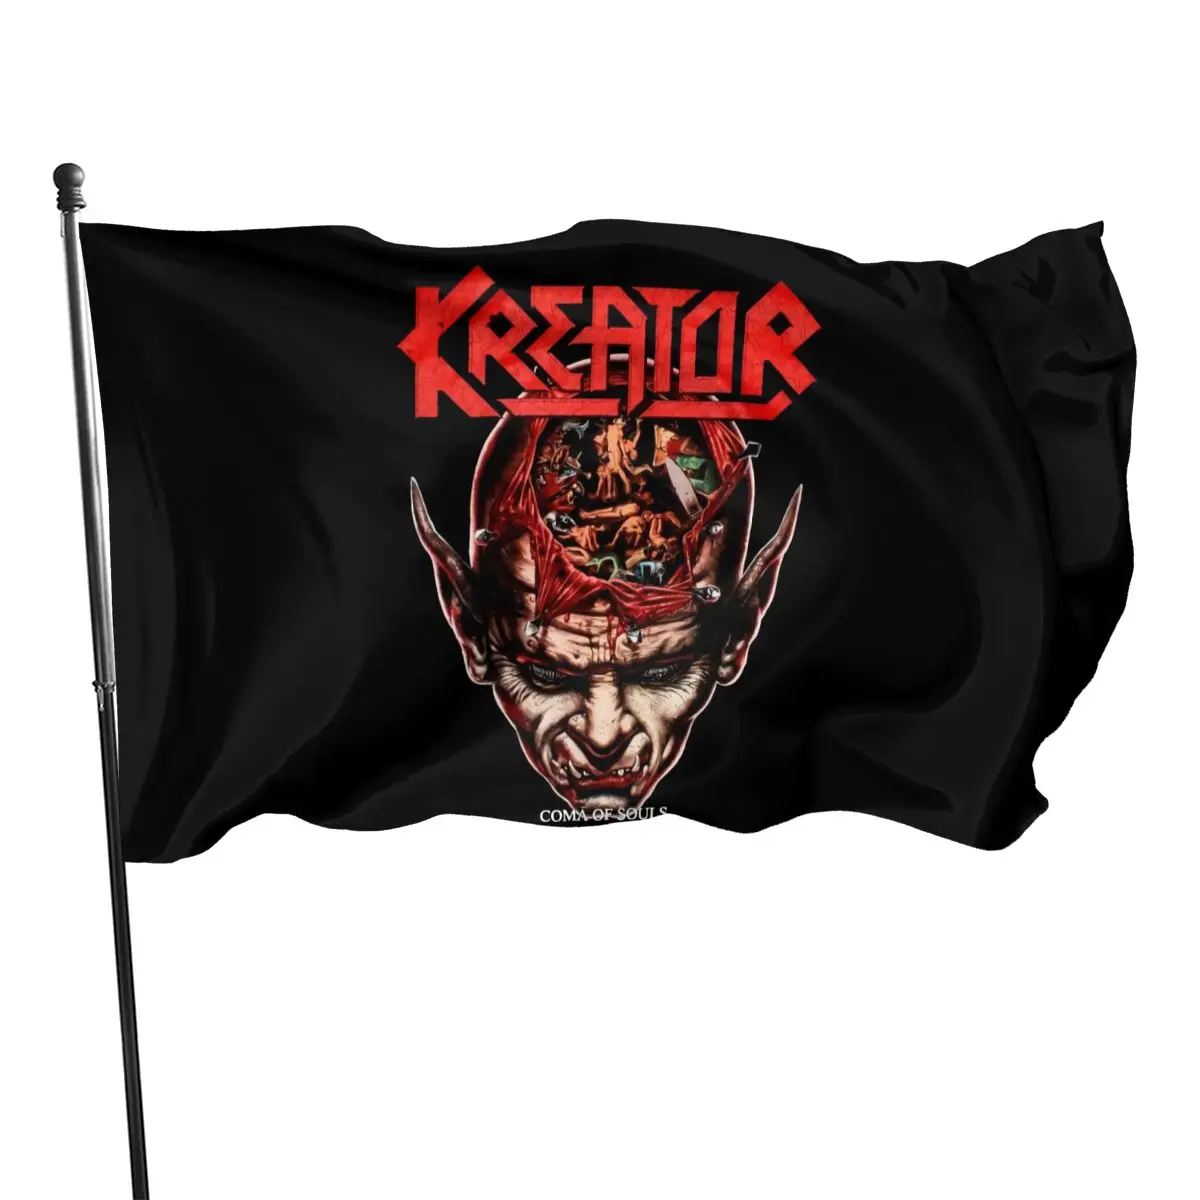 

Kreator Coma Of Souls90 Thrash Sodom Destruction Deathrow New Black Summer Style Science Top Unique Flag